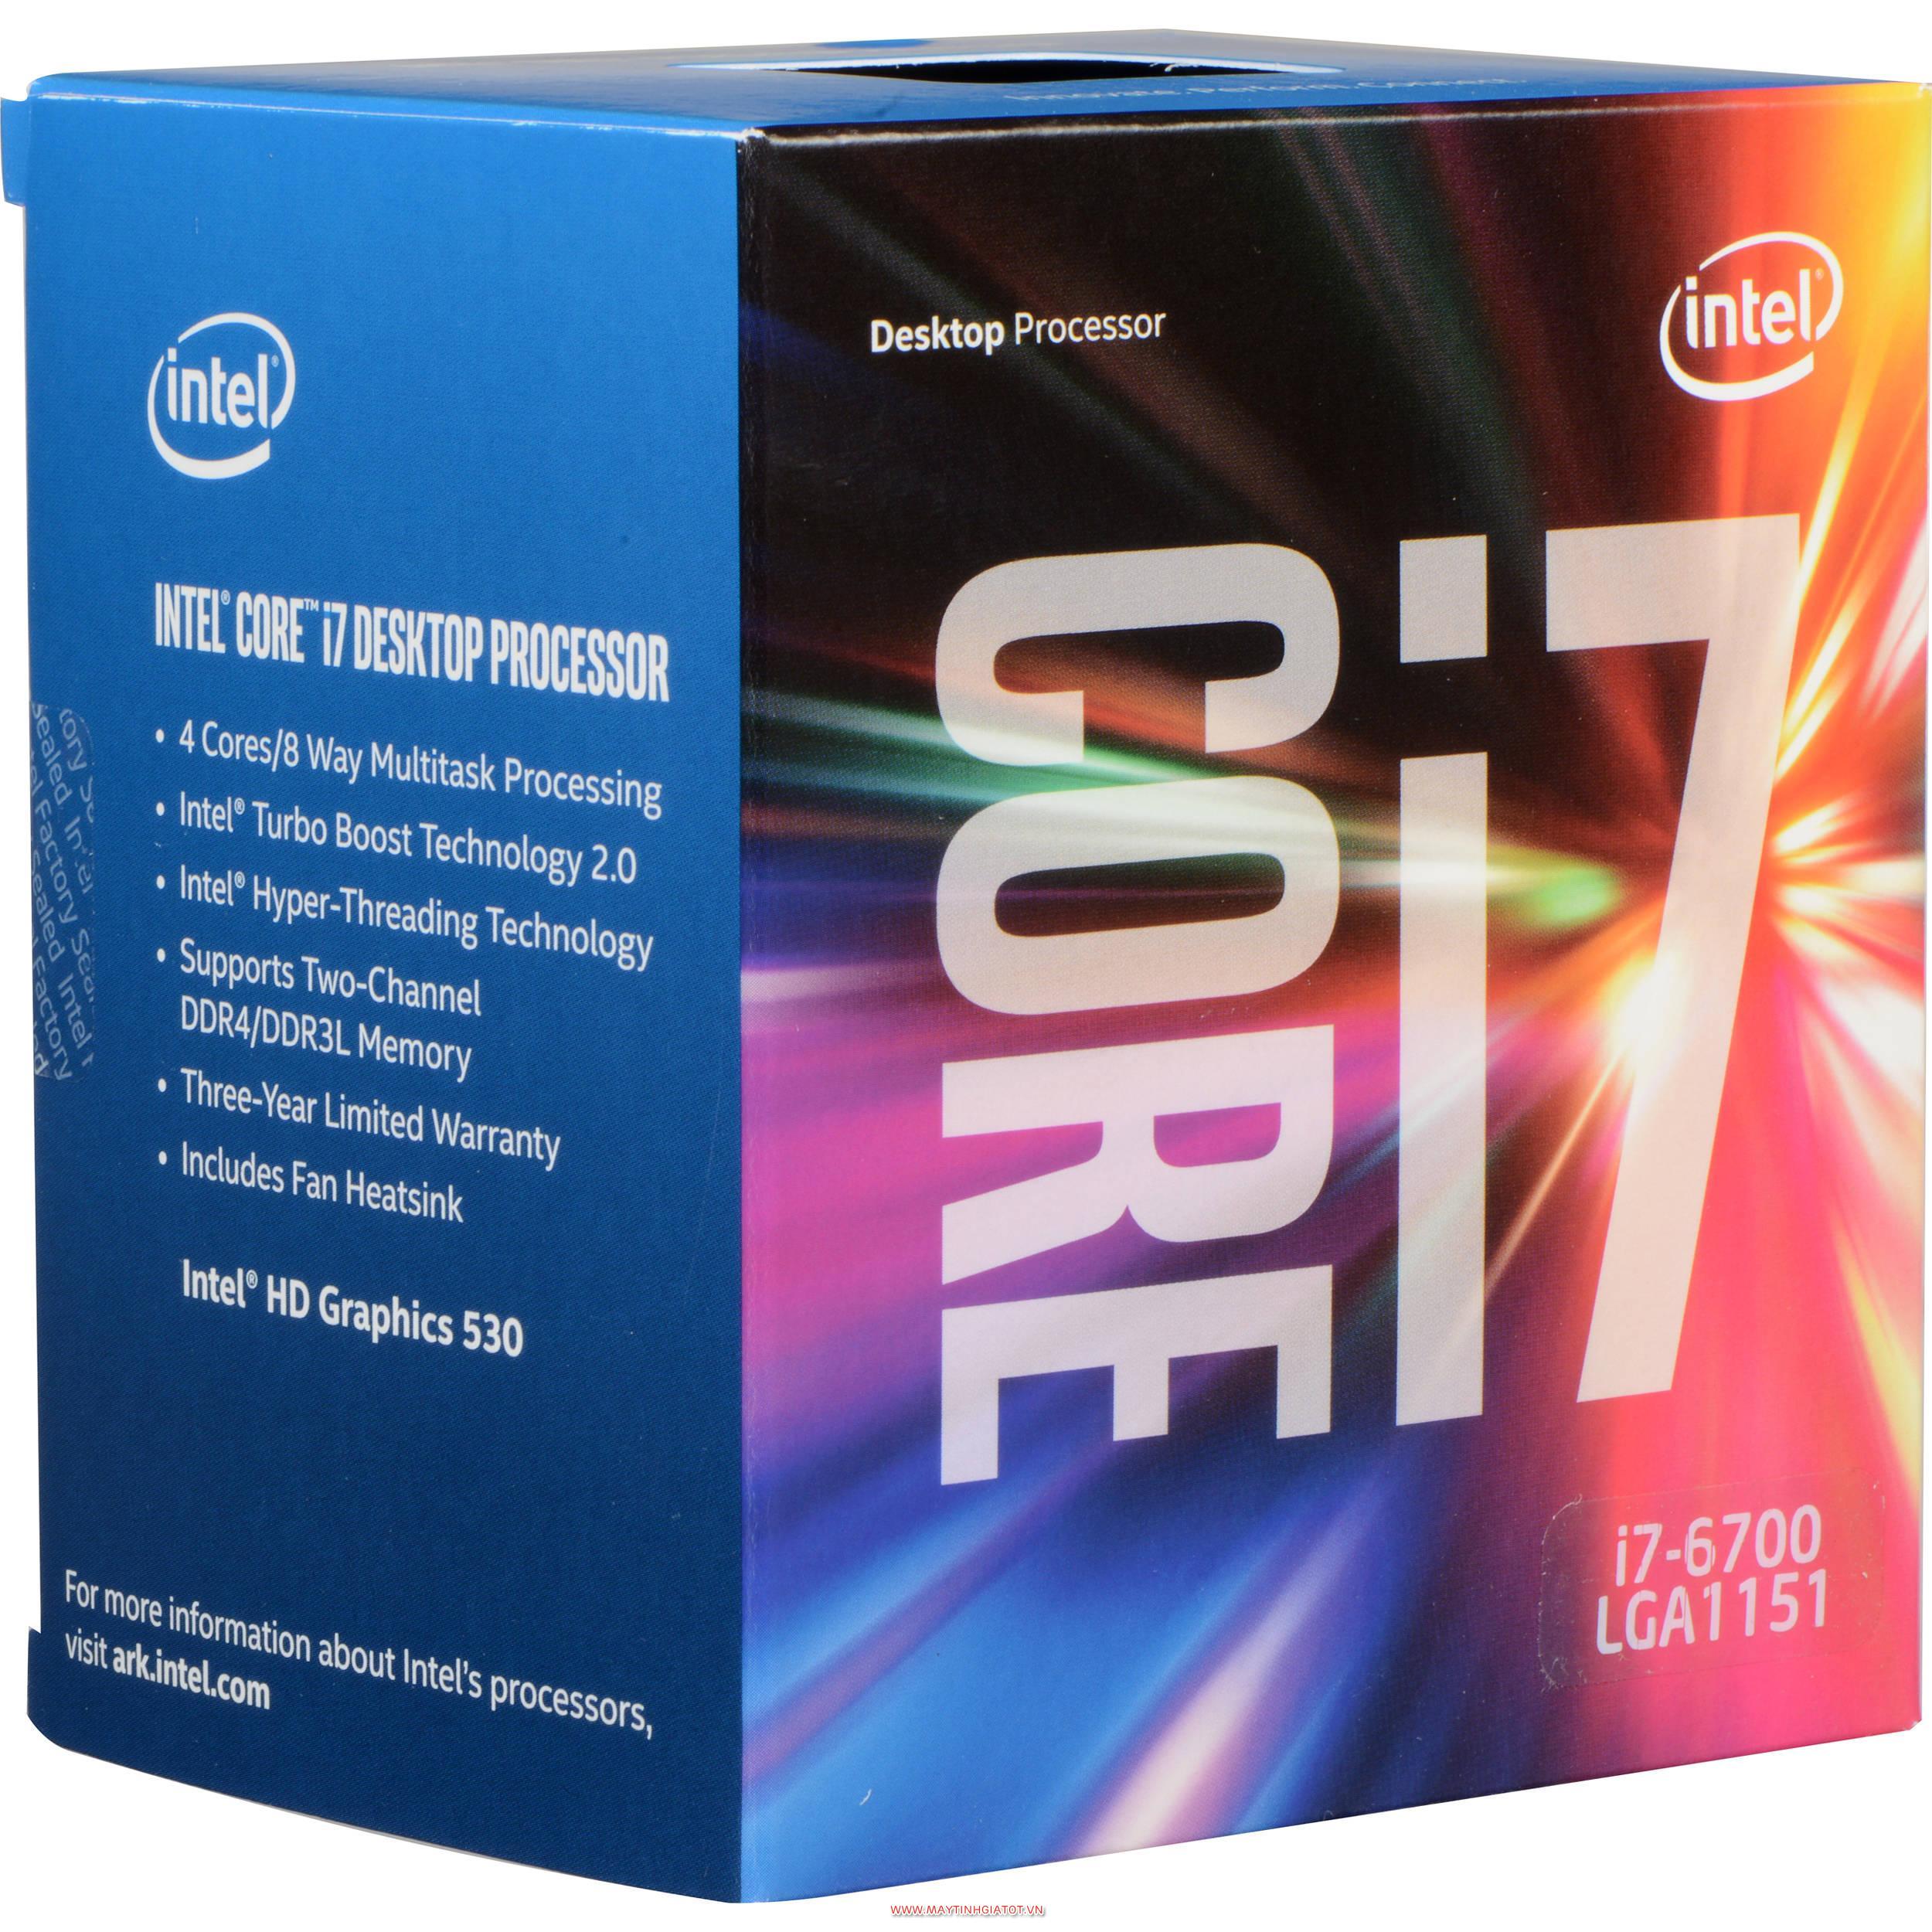 CPU INTEL CORE I7 6700 CŨ 3.4Ghz turbo 4.0Ghz / 8M cache 3L